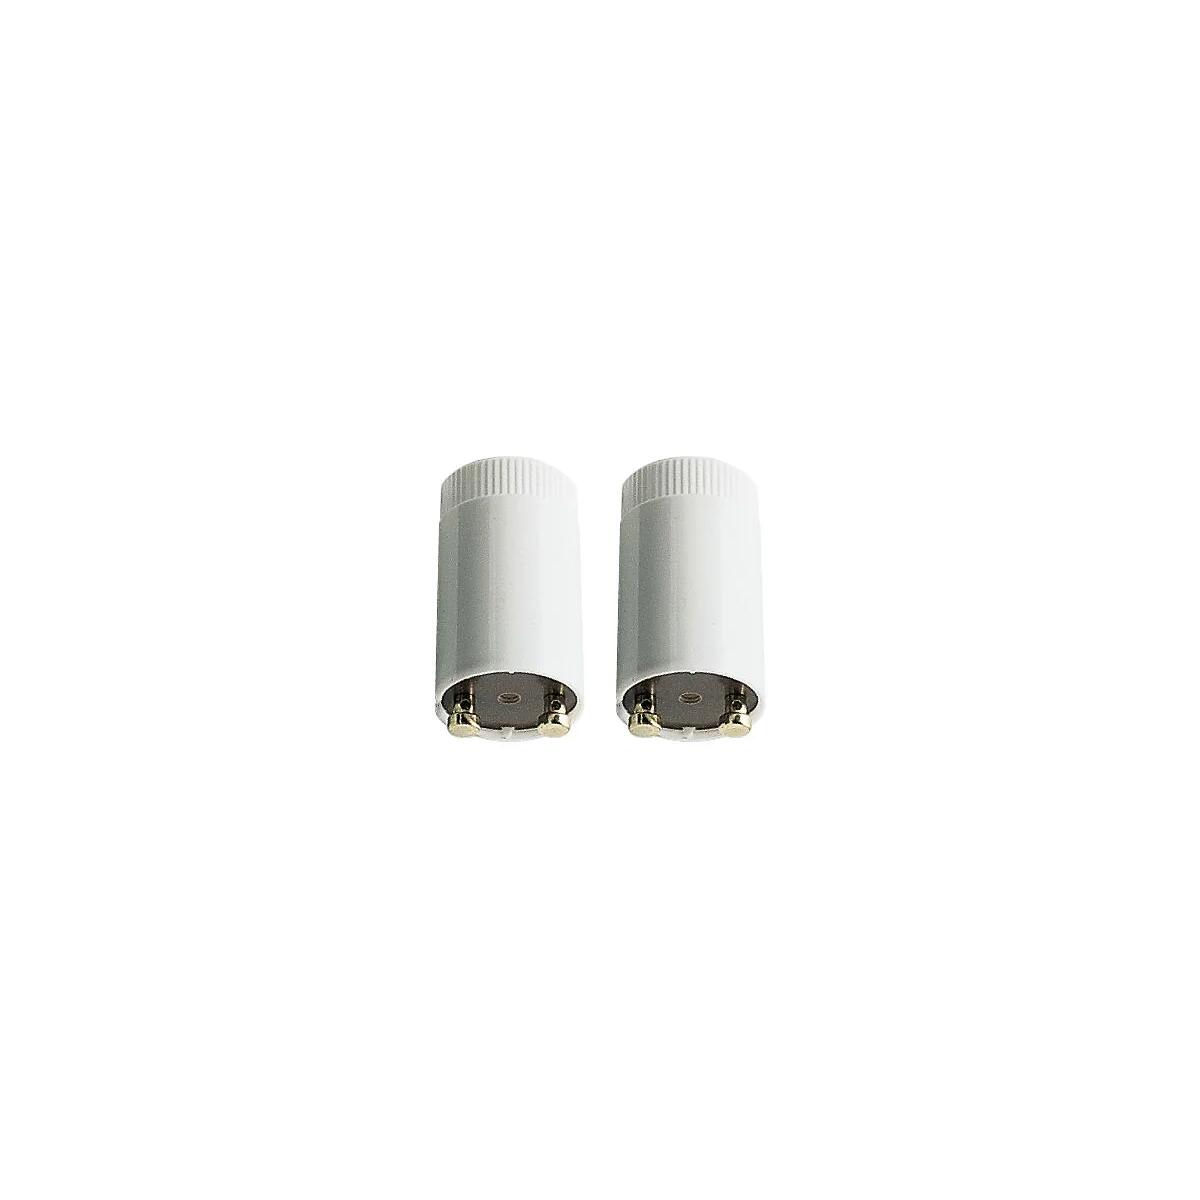 Leuchtstofflampe Starter Tandem/Duo max. 2x4-22W Weiß